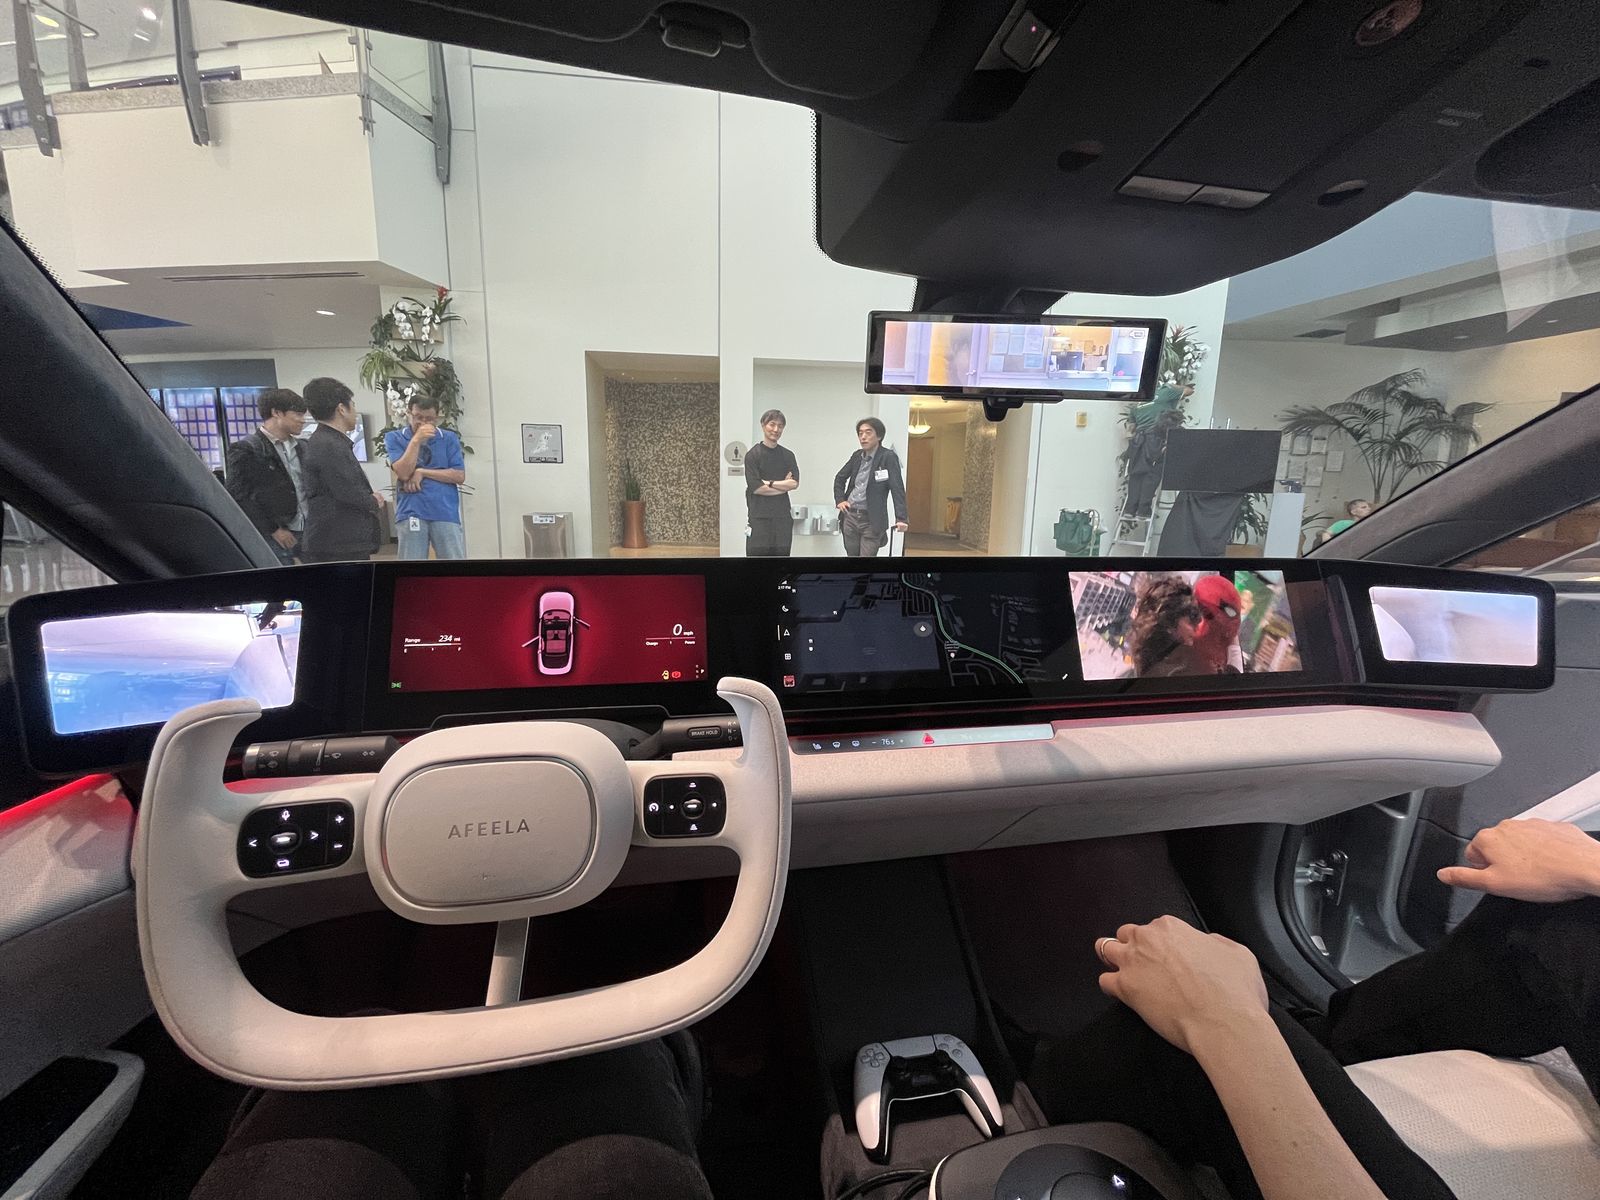 Inside Sony and Honda's Afeela prototype car